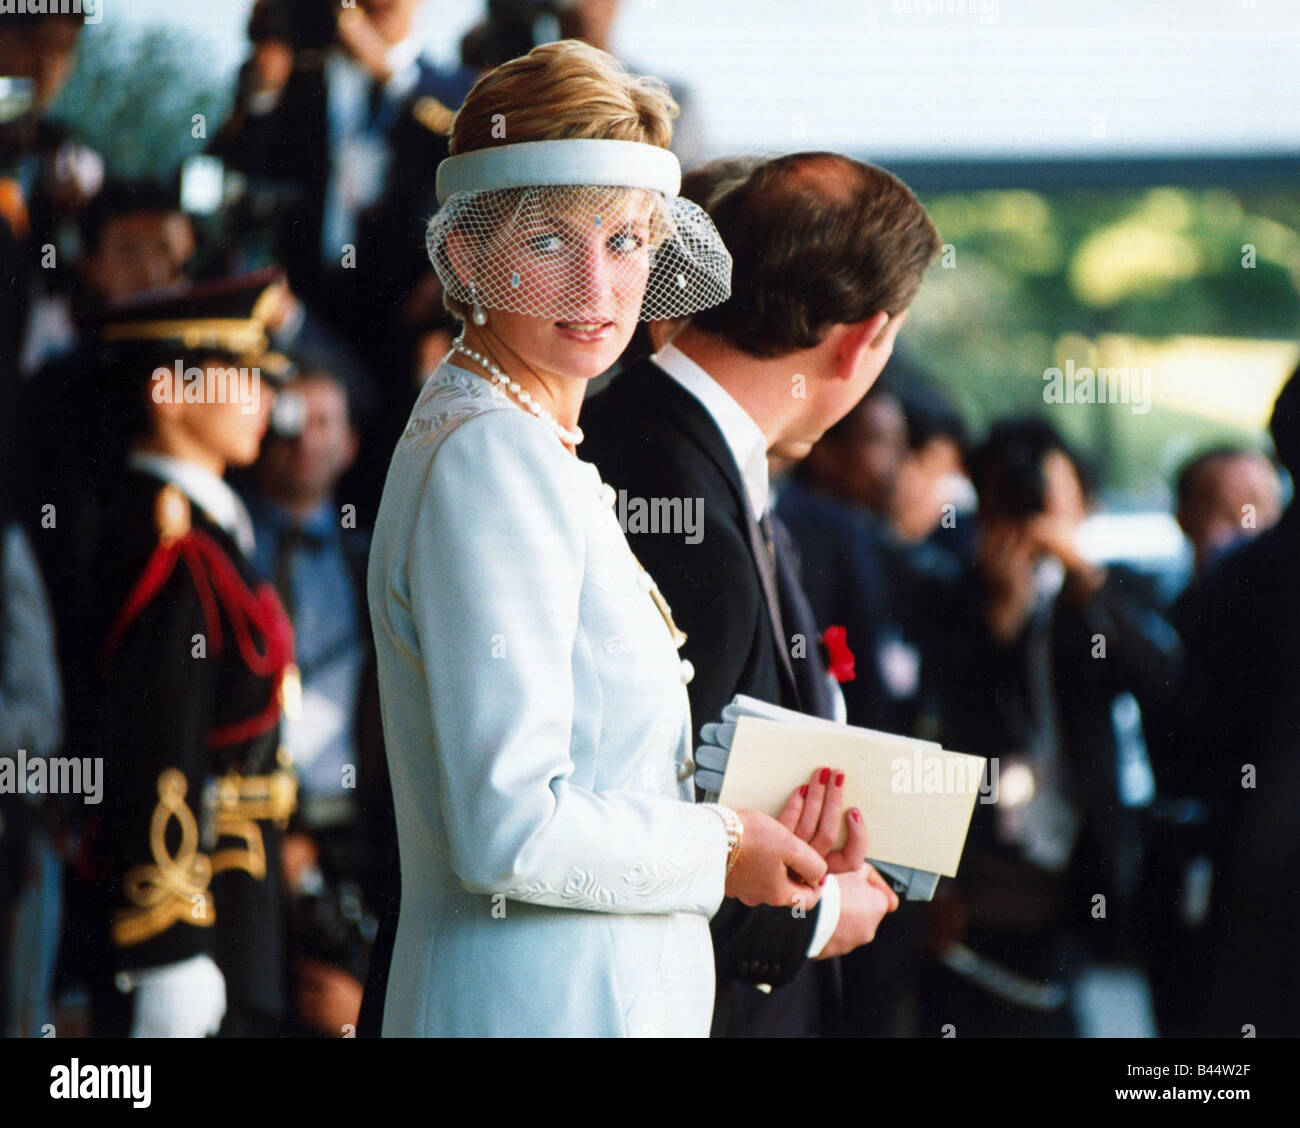 Prince Charles and Princess Diana December 1992 Japan Overseas Visit Stock Photo